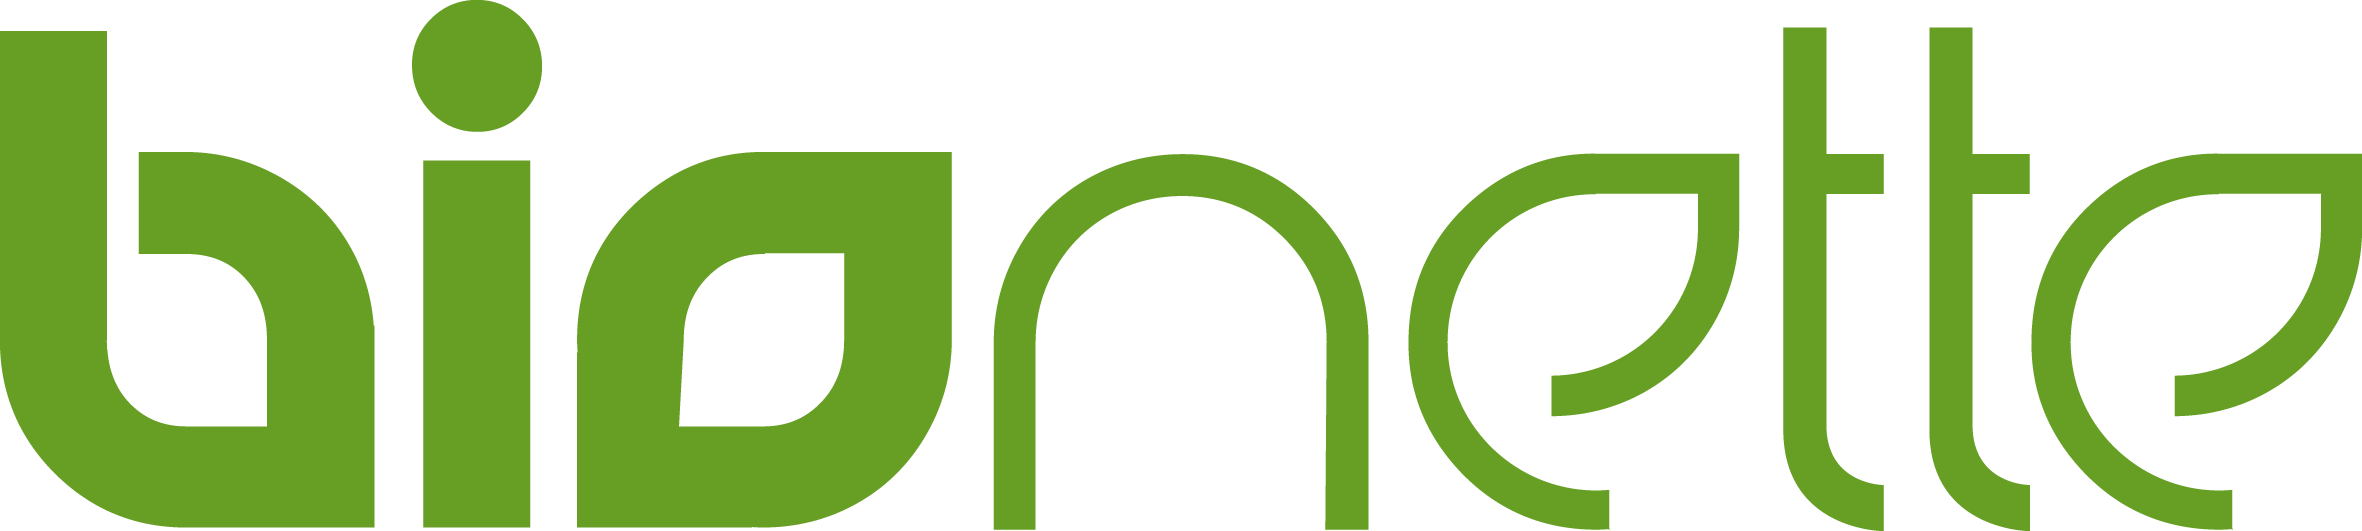 bionette logo